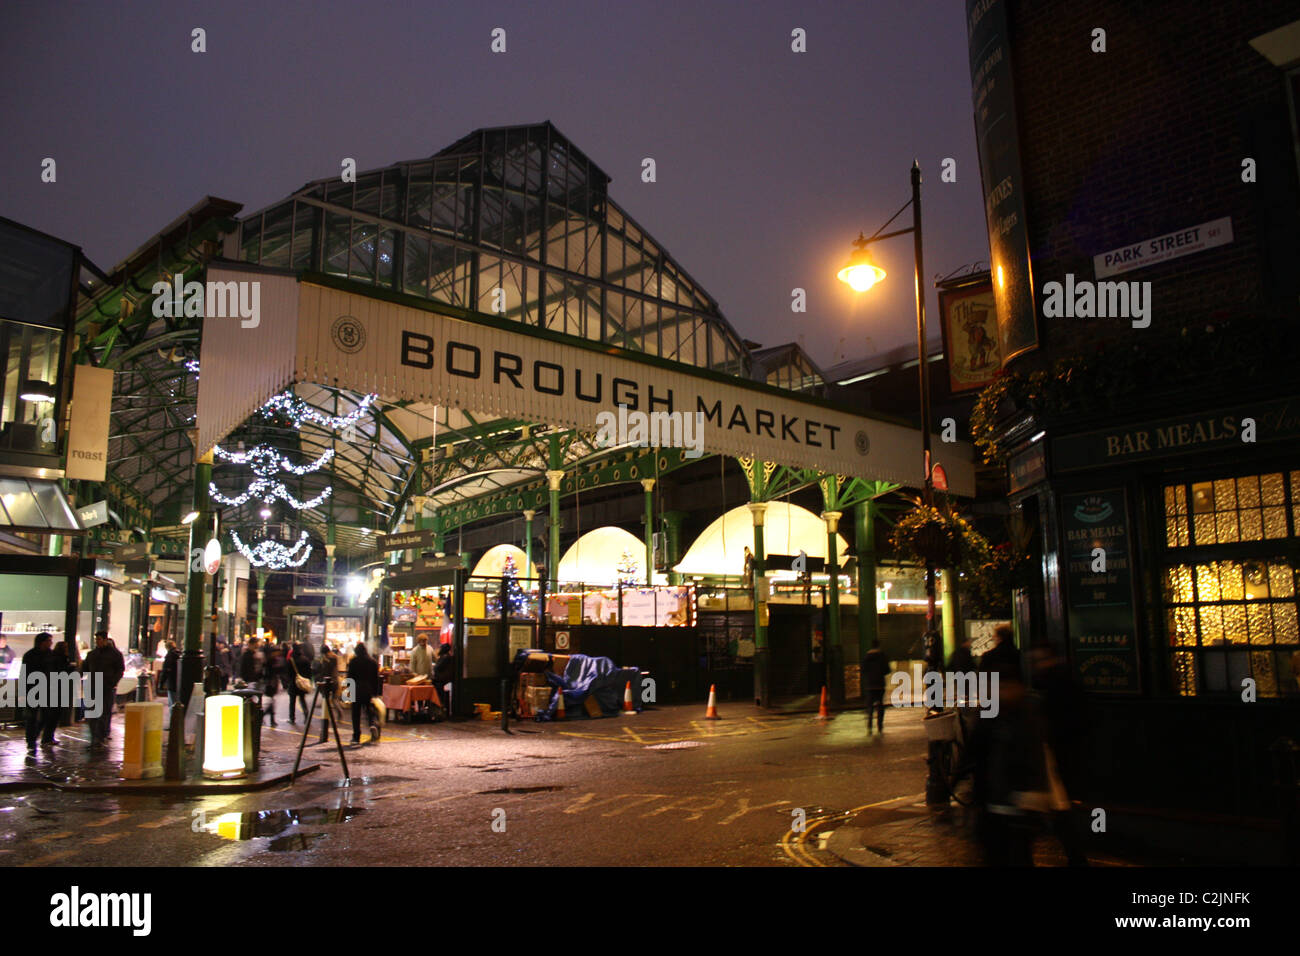 View of Borough Market, London at night Stock Photo